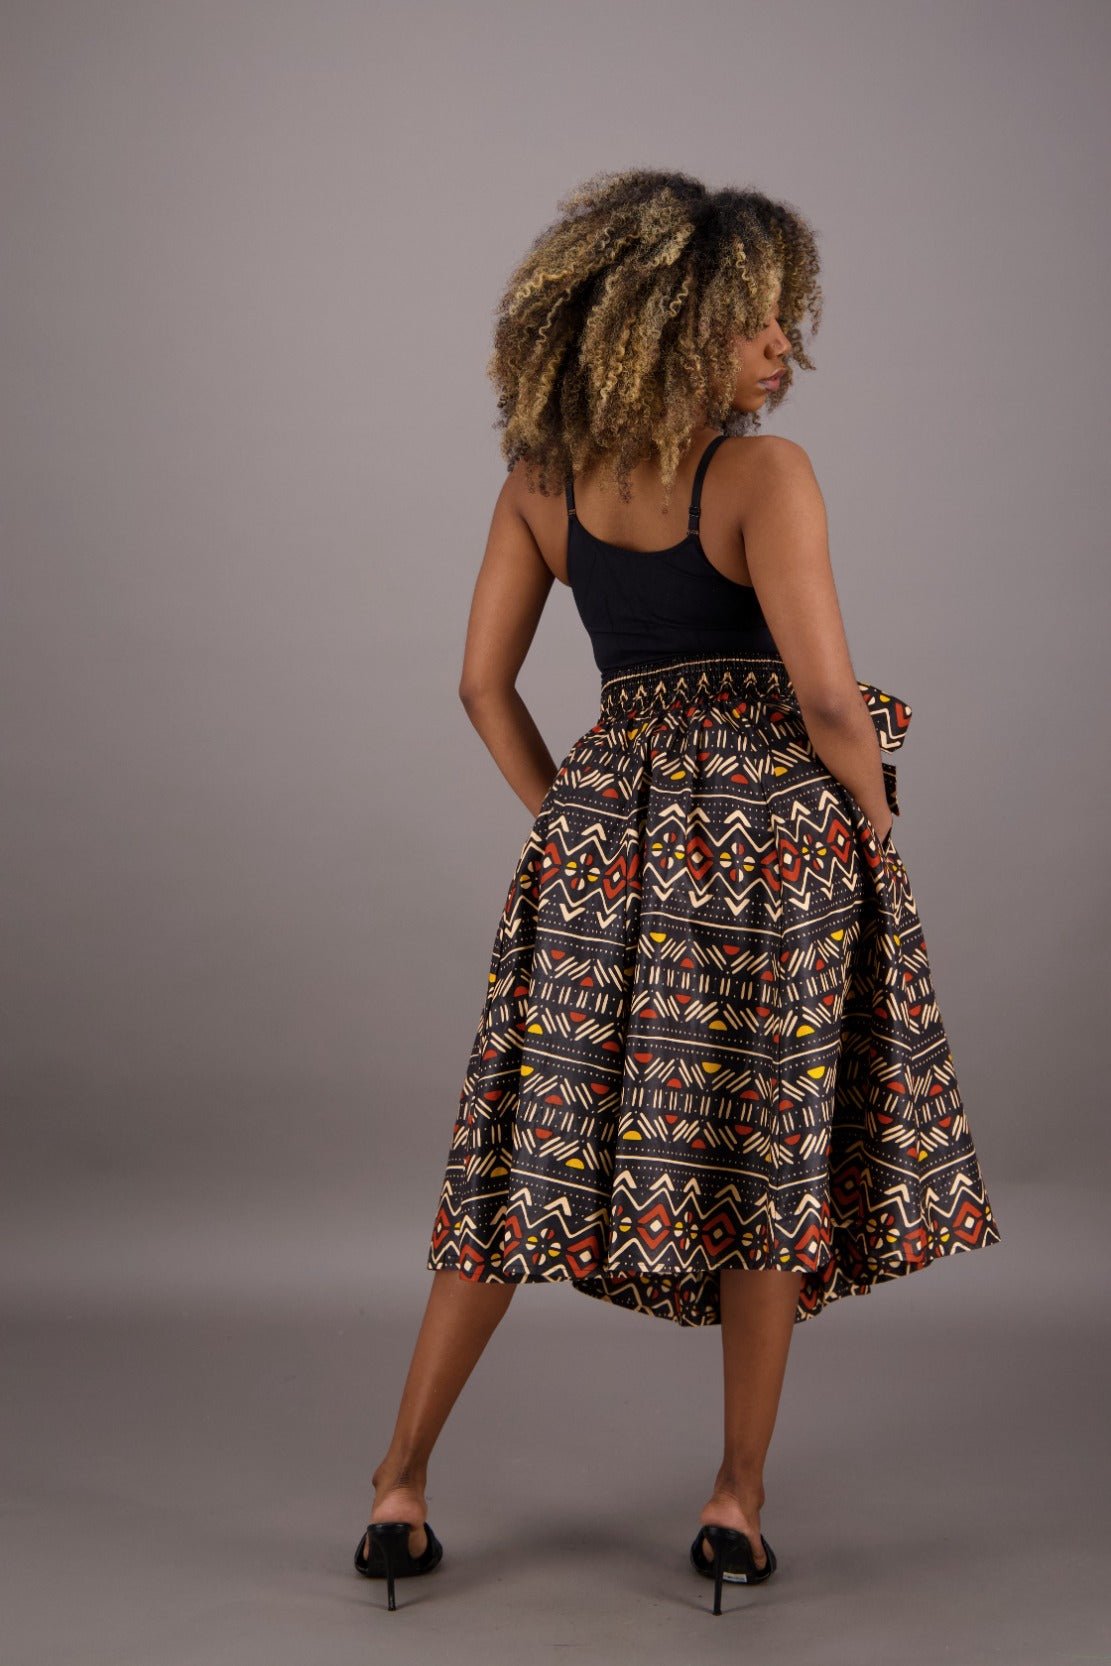 Mid-Length African Print Skirt 16321-257 - Advance Apparels Inc